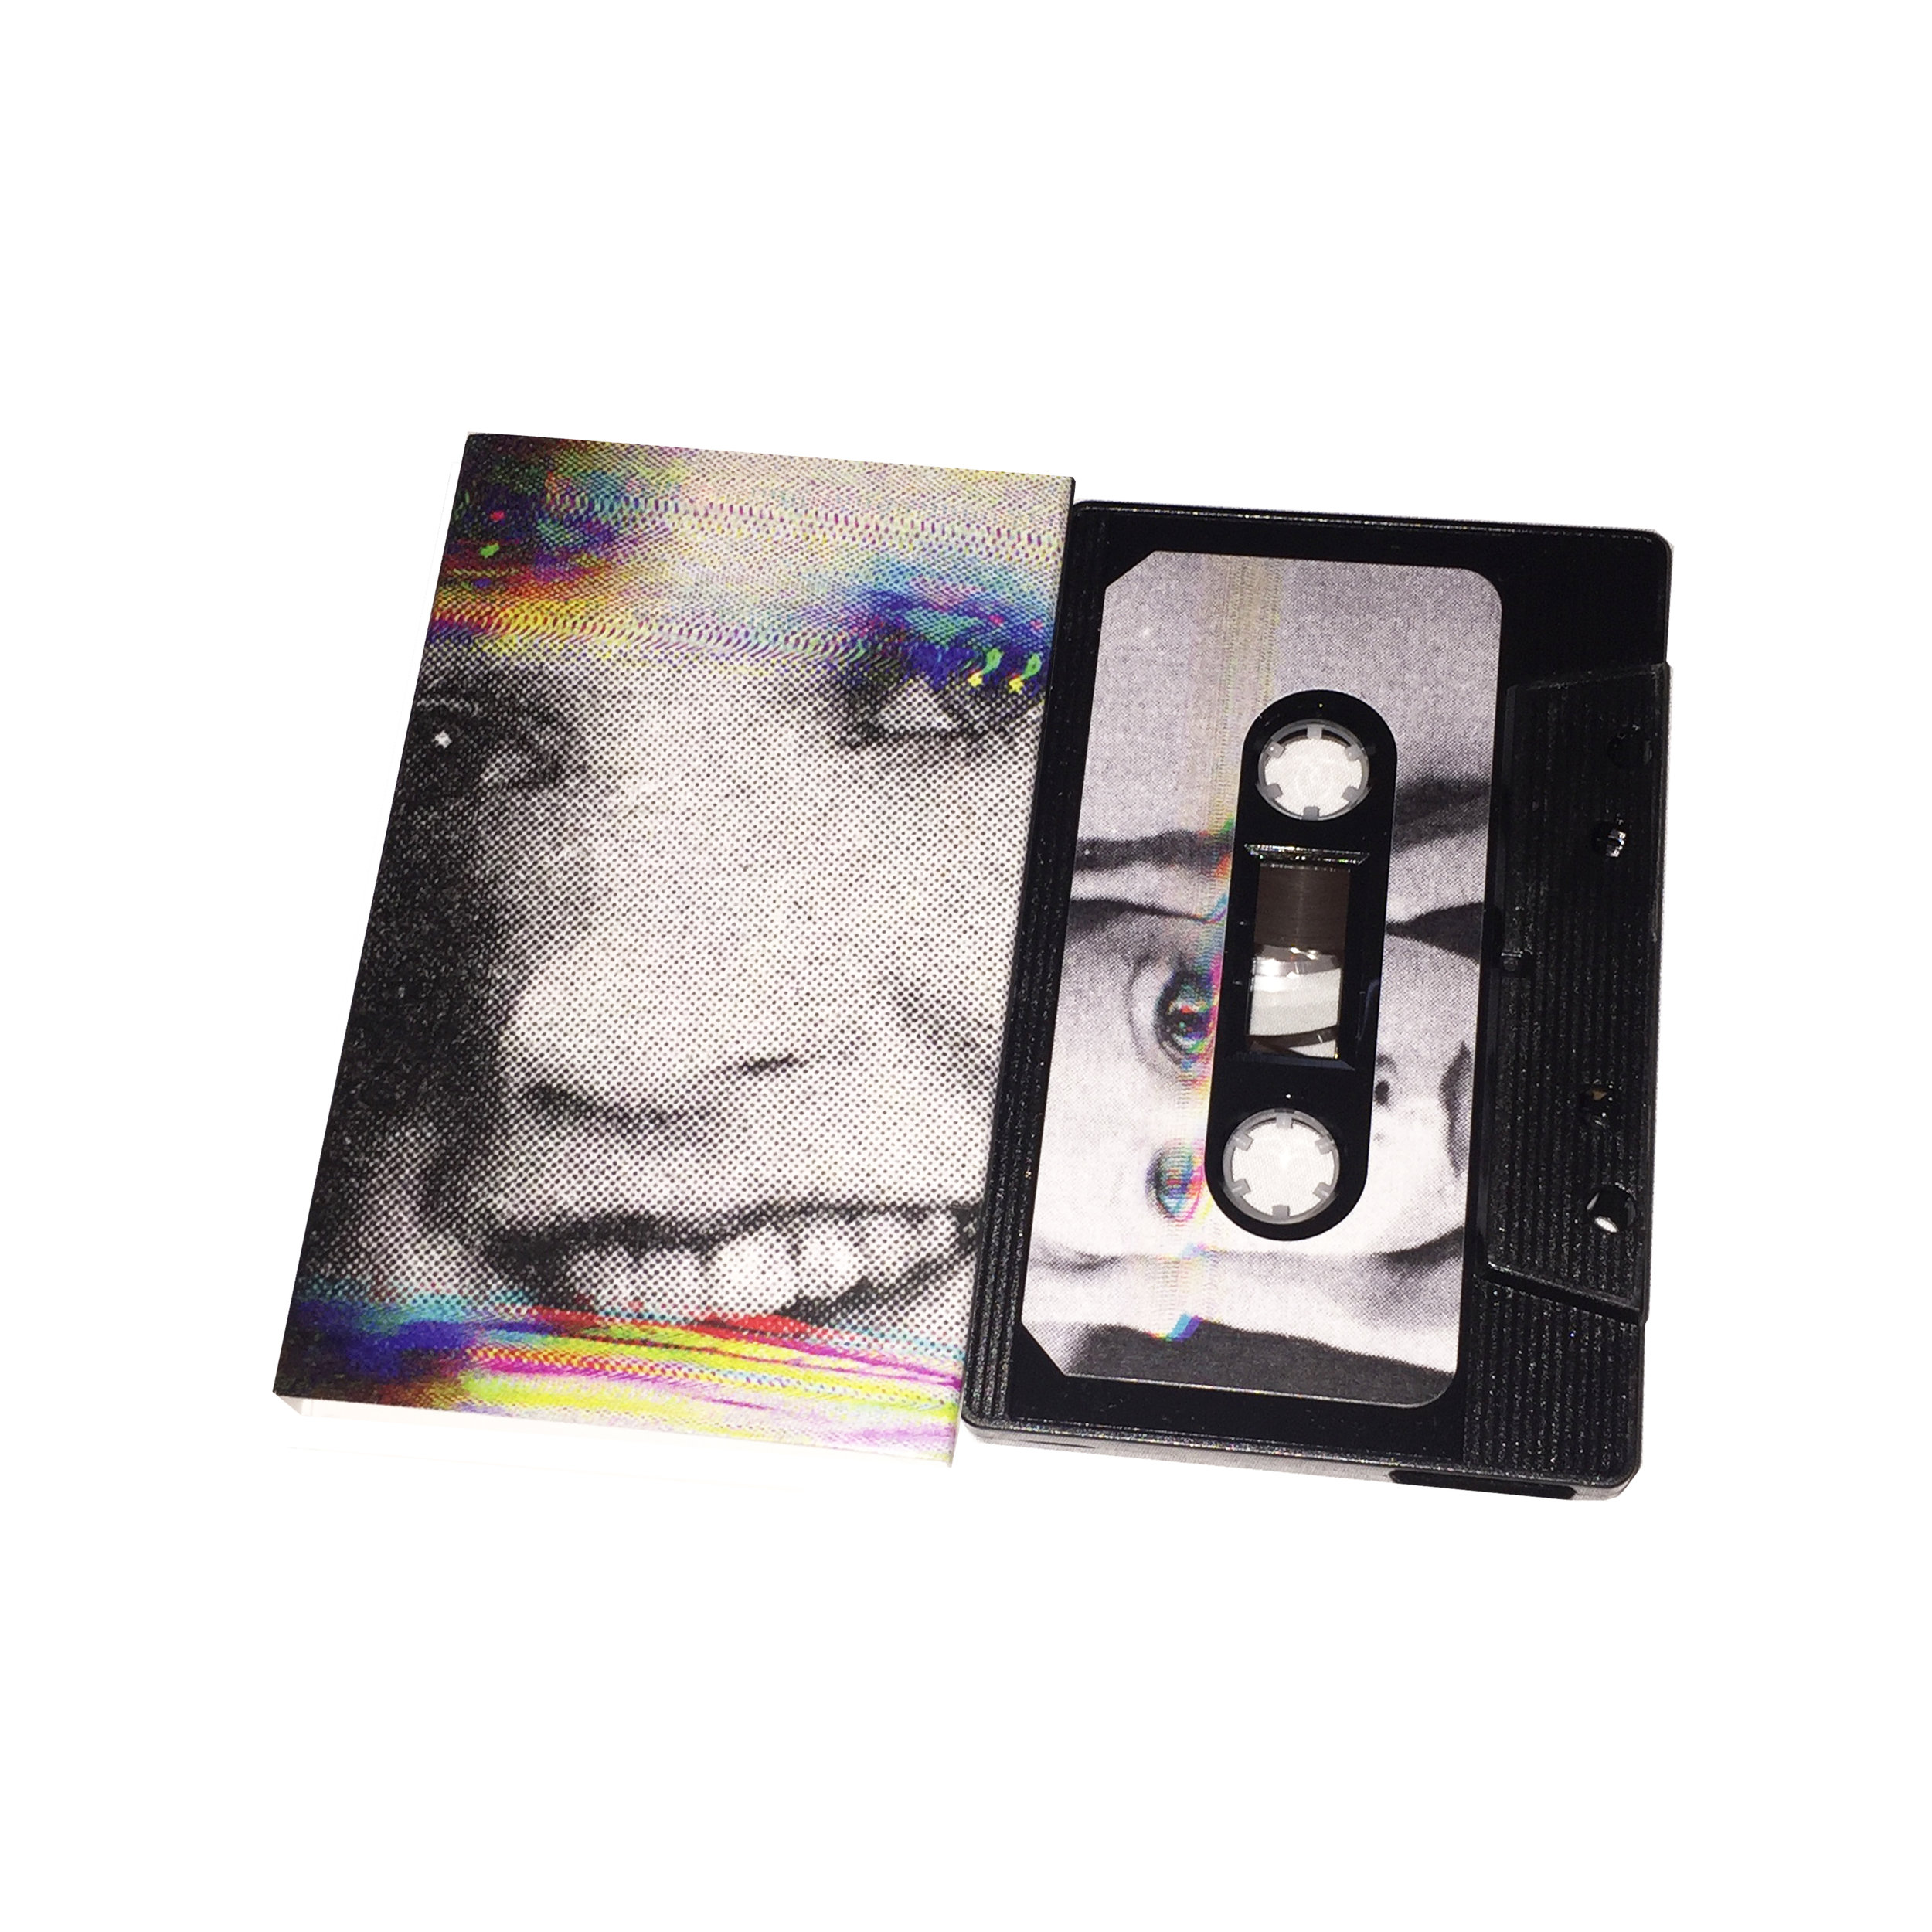 Fyvr - Almost Happy (Cassette) – $6.00